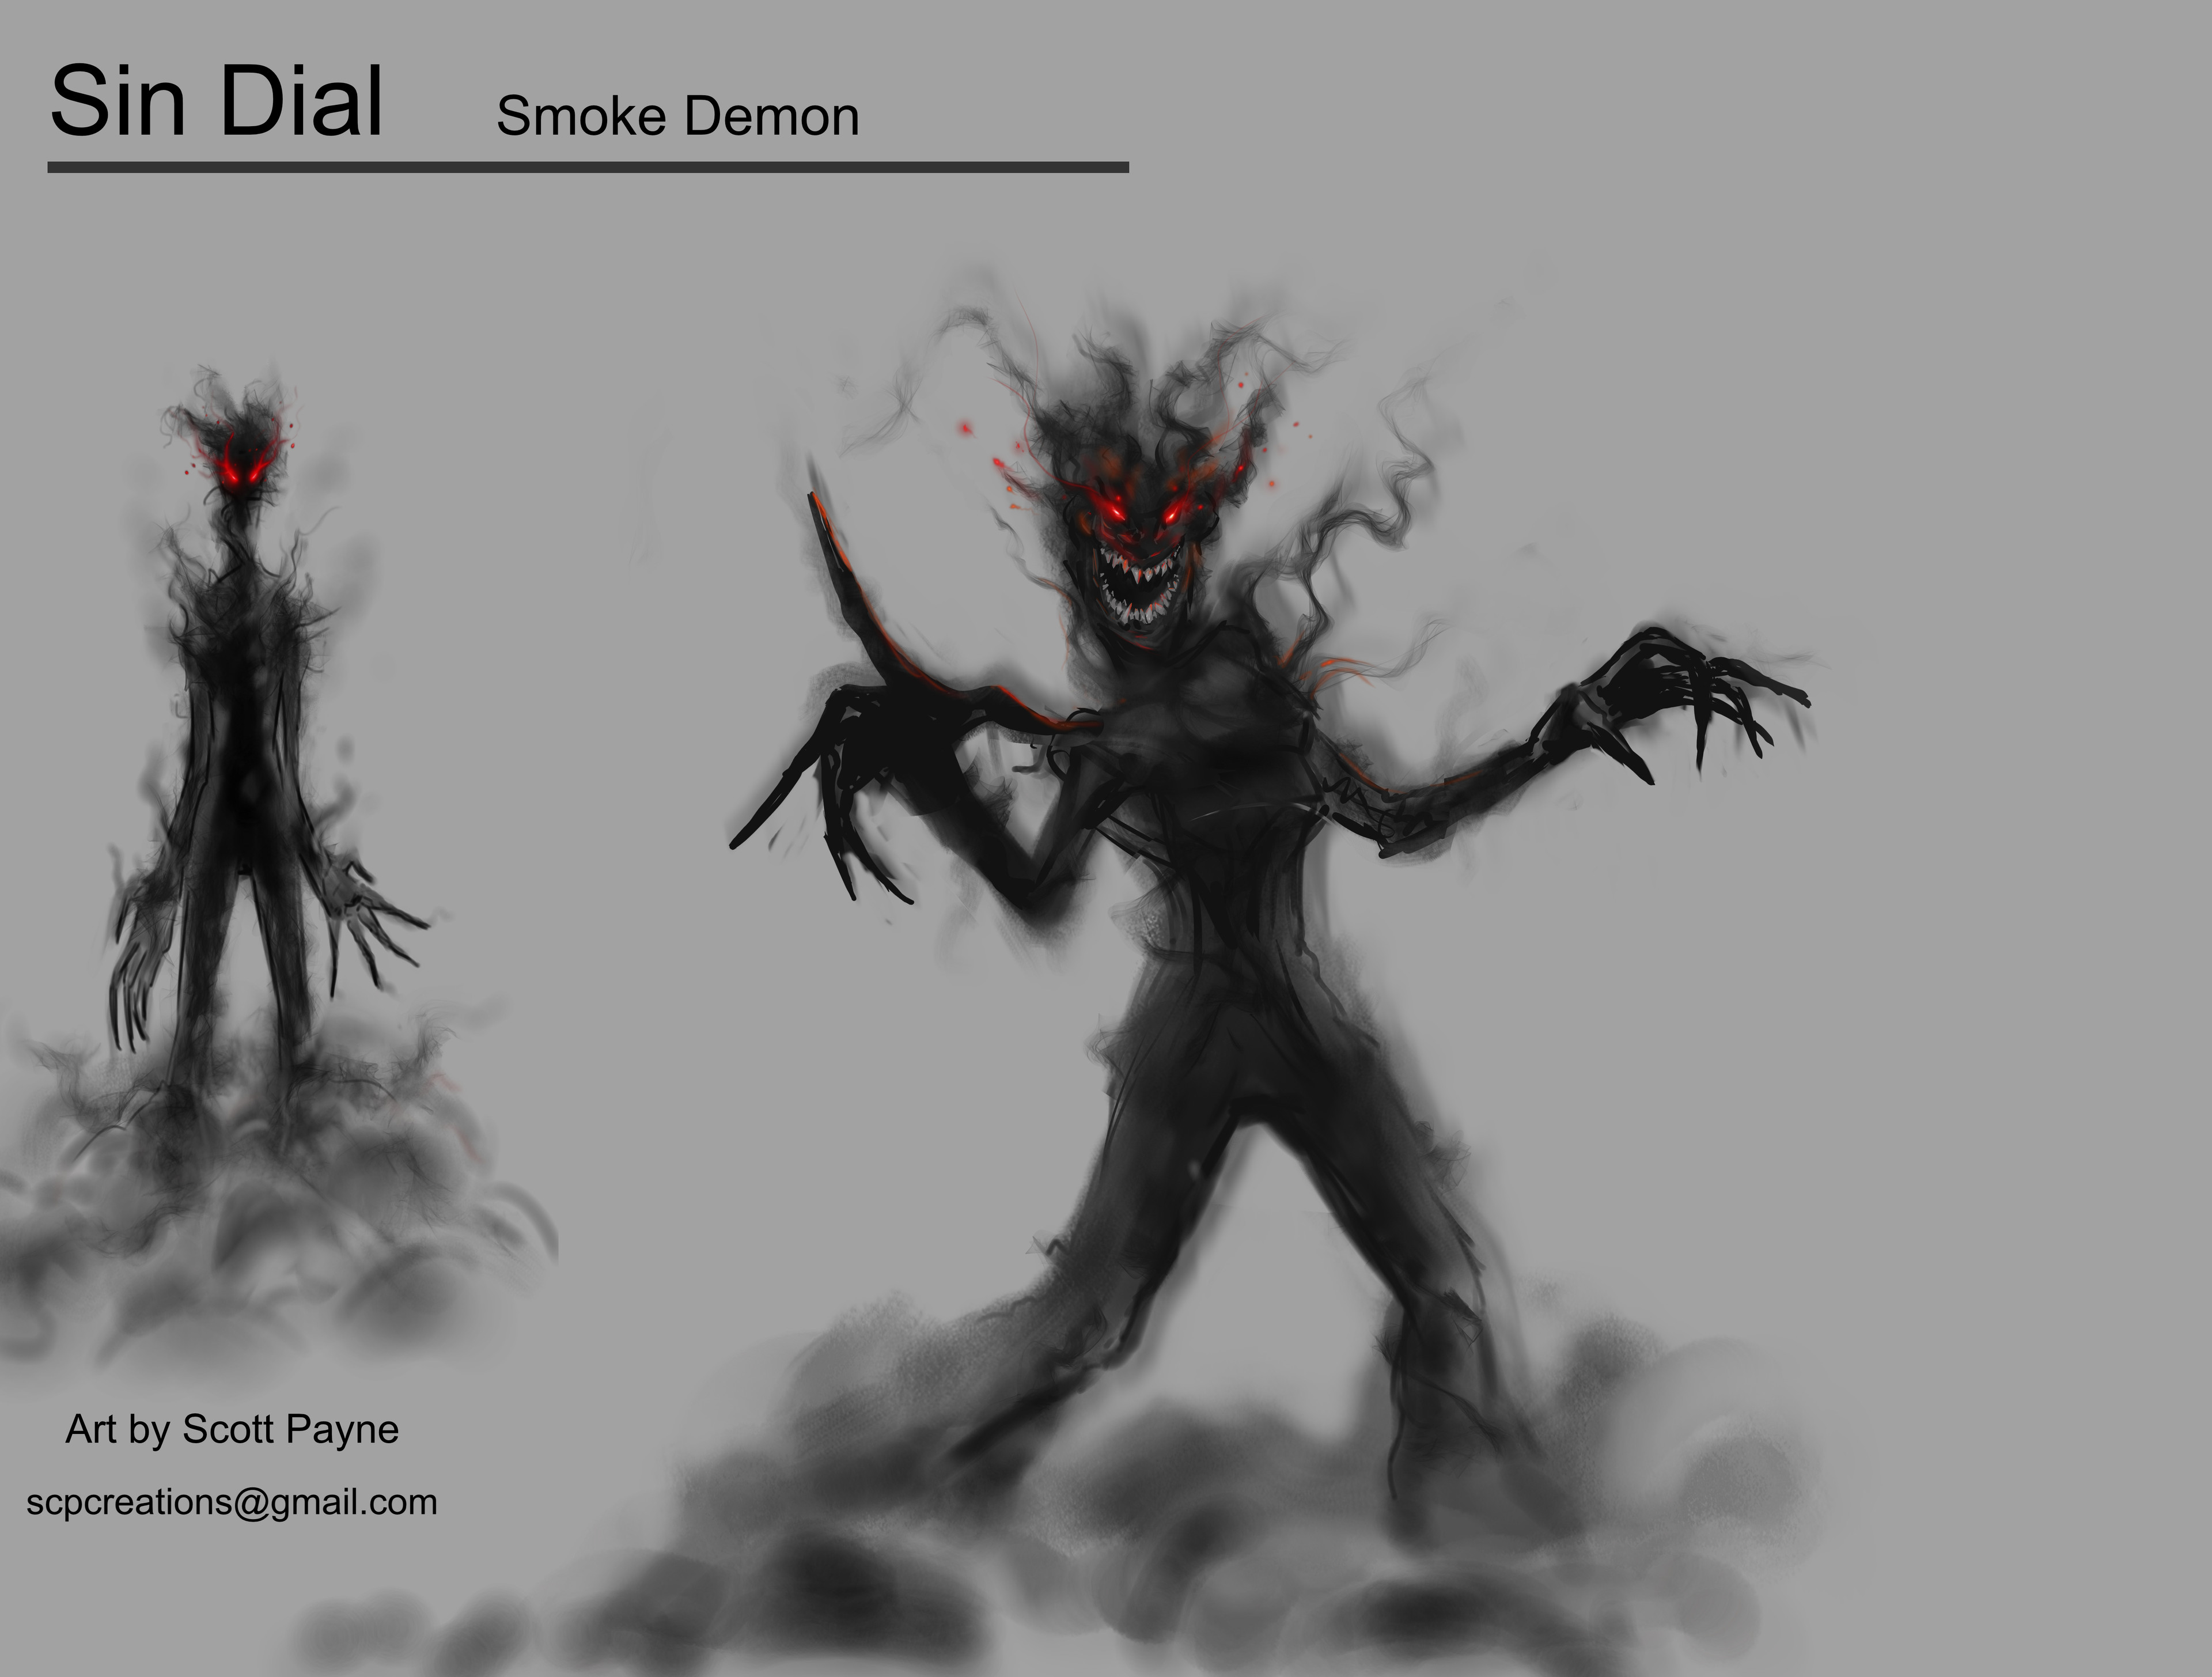 Smoke Demon 1 and 2 body shapes.